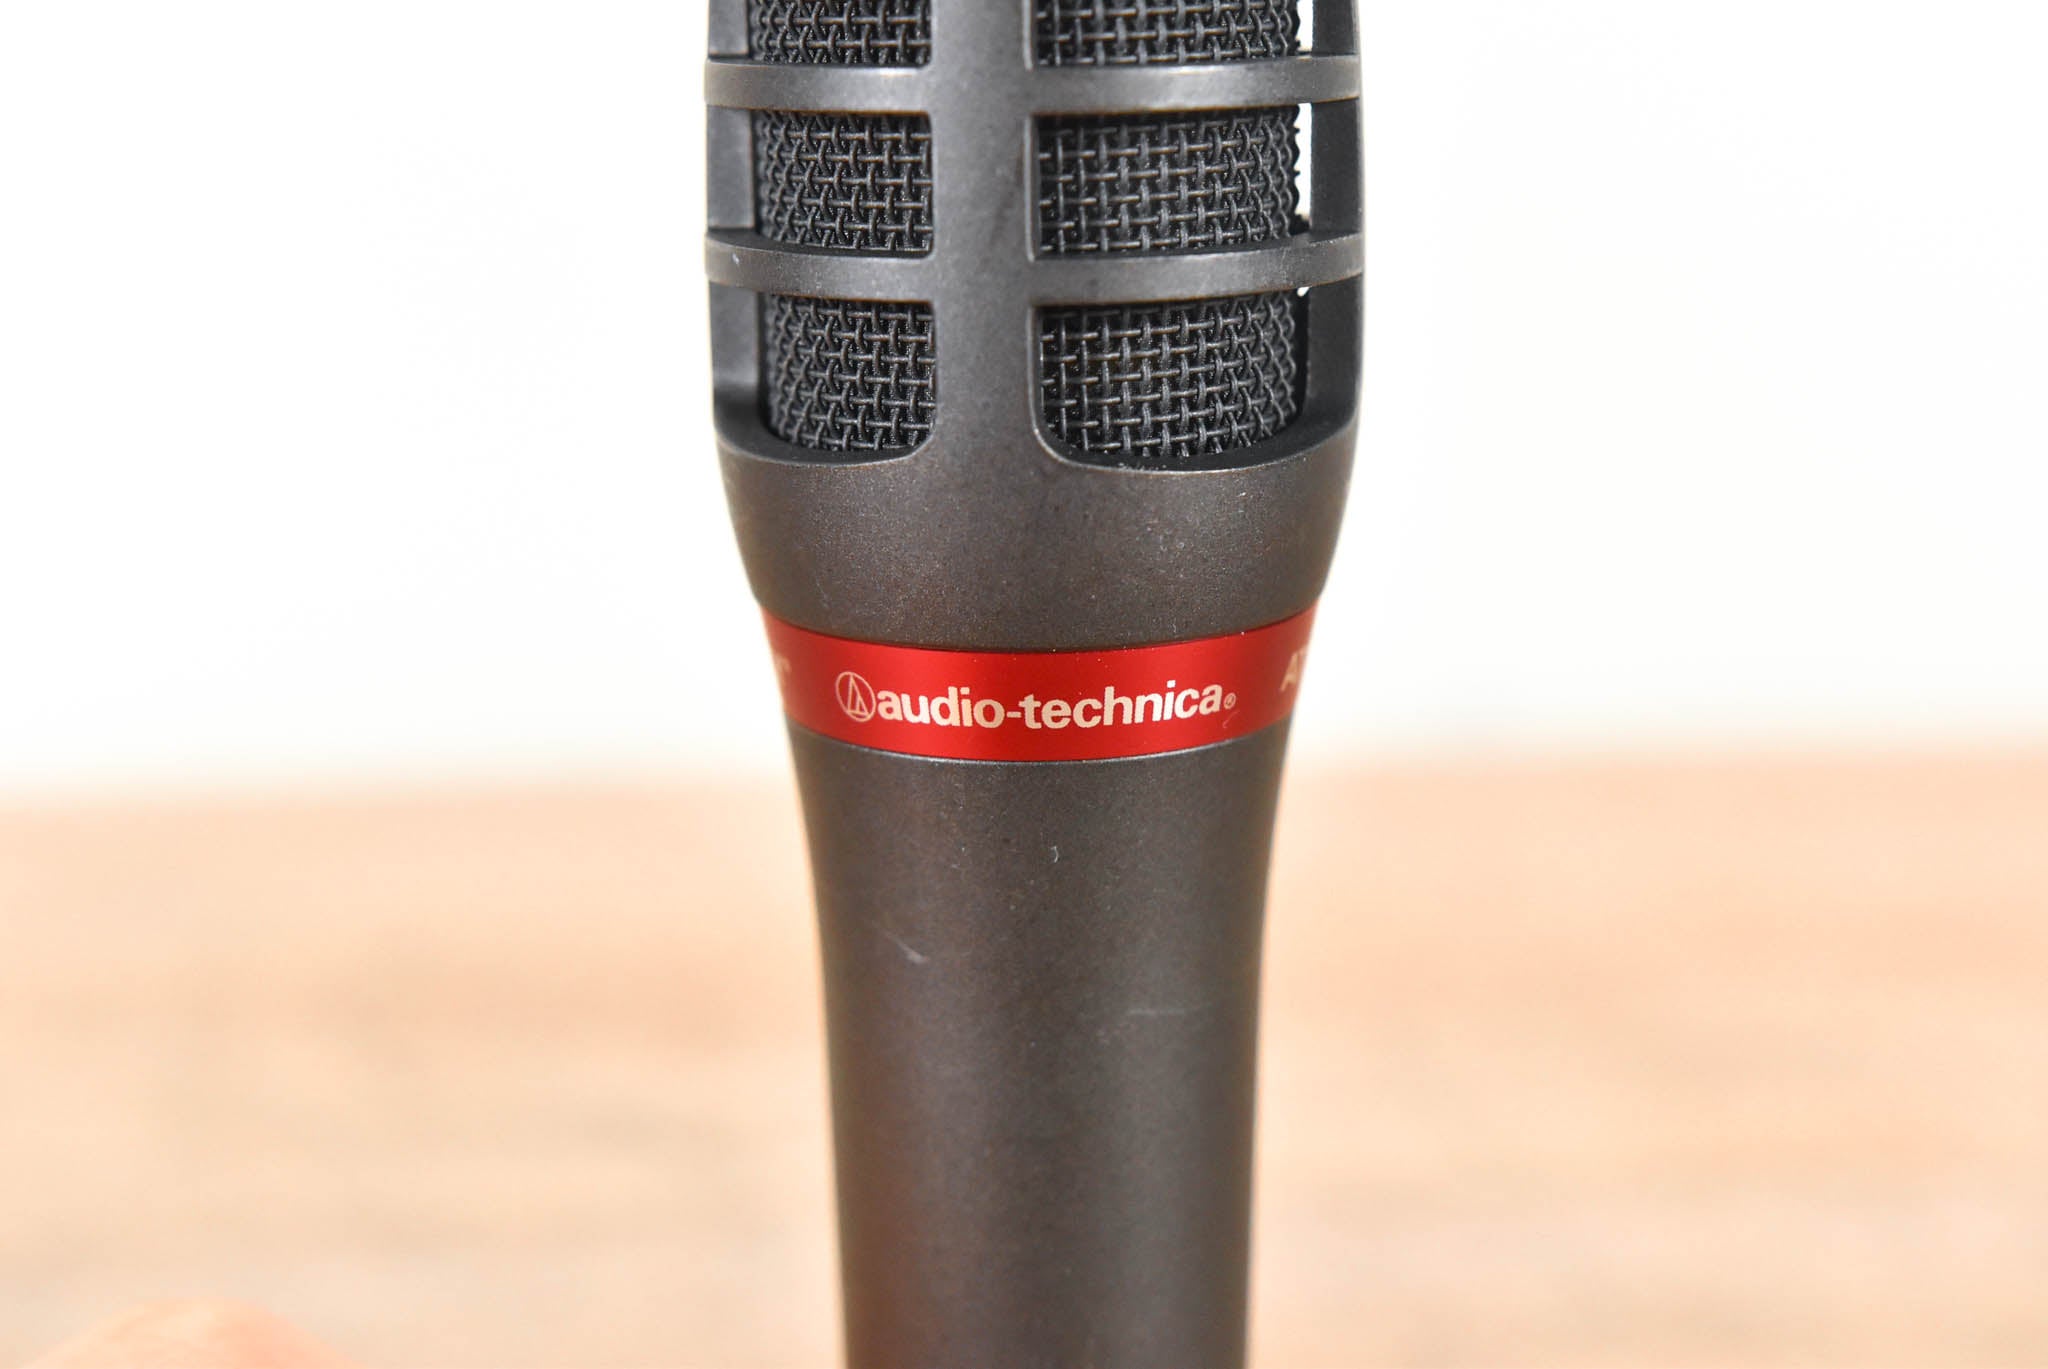 Audio-Technica ATM29HE Hypercardioid Dynamic Microphone